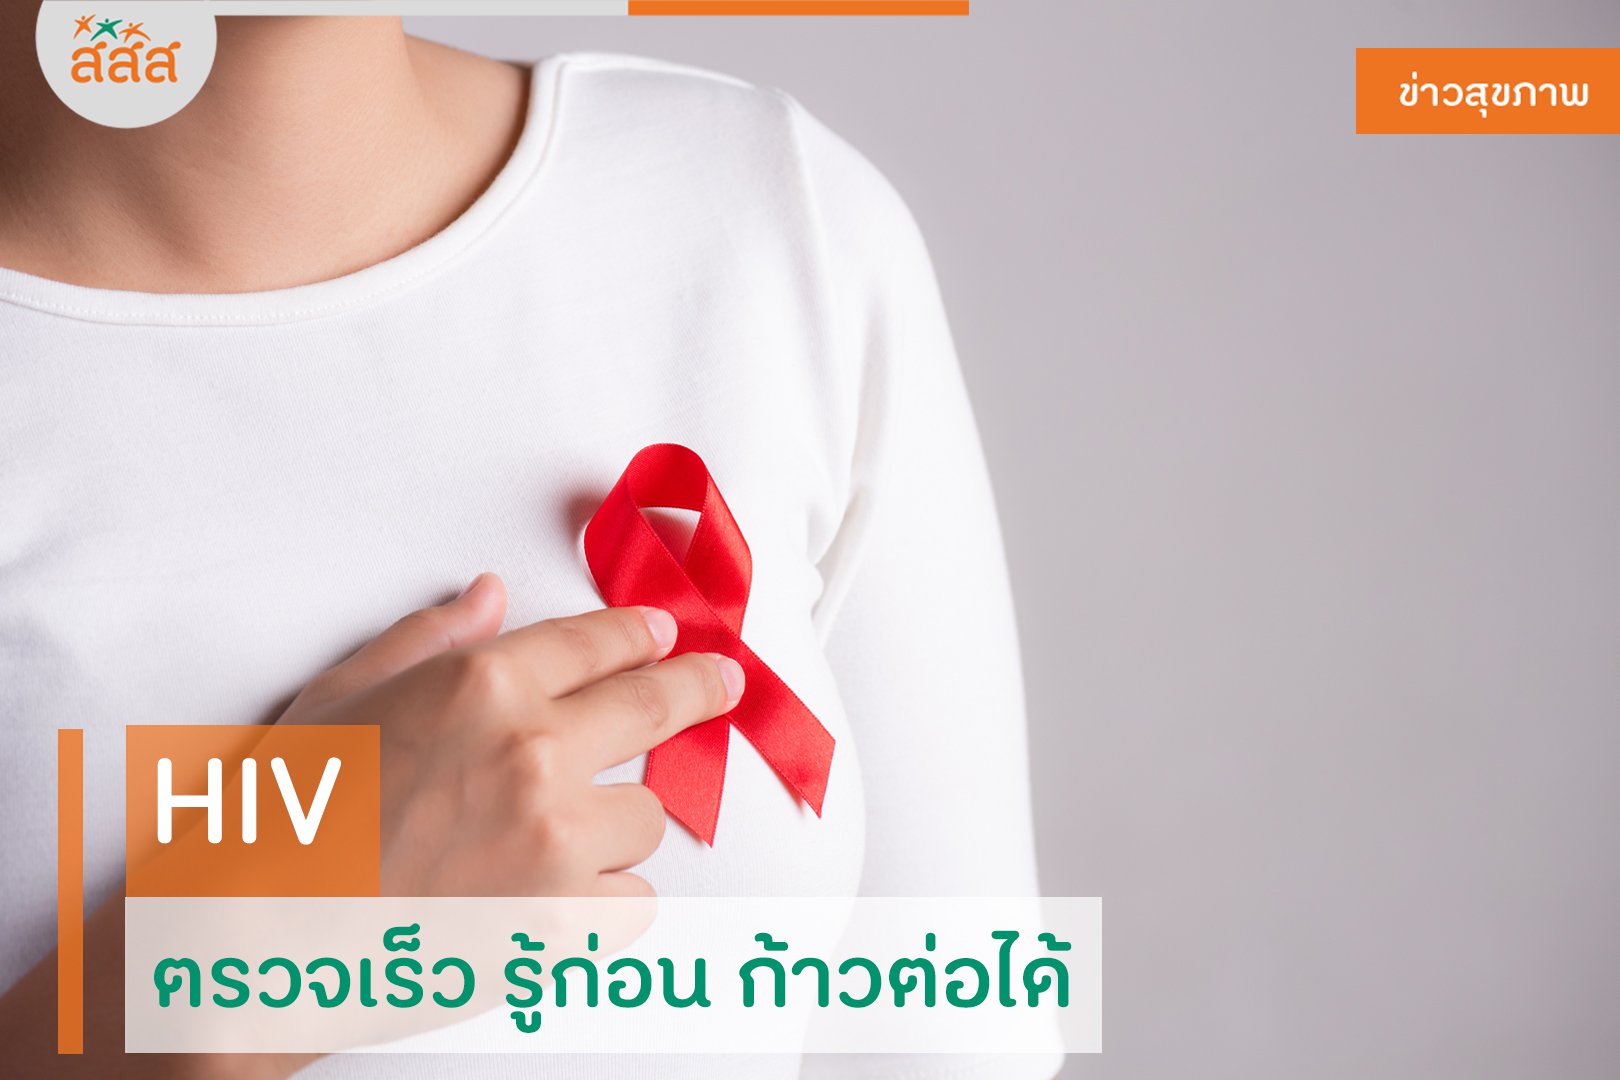 HIV ตรวจเร็ว รู้ก่อน ก้าวต่อได้ thaihealth